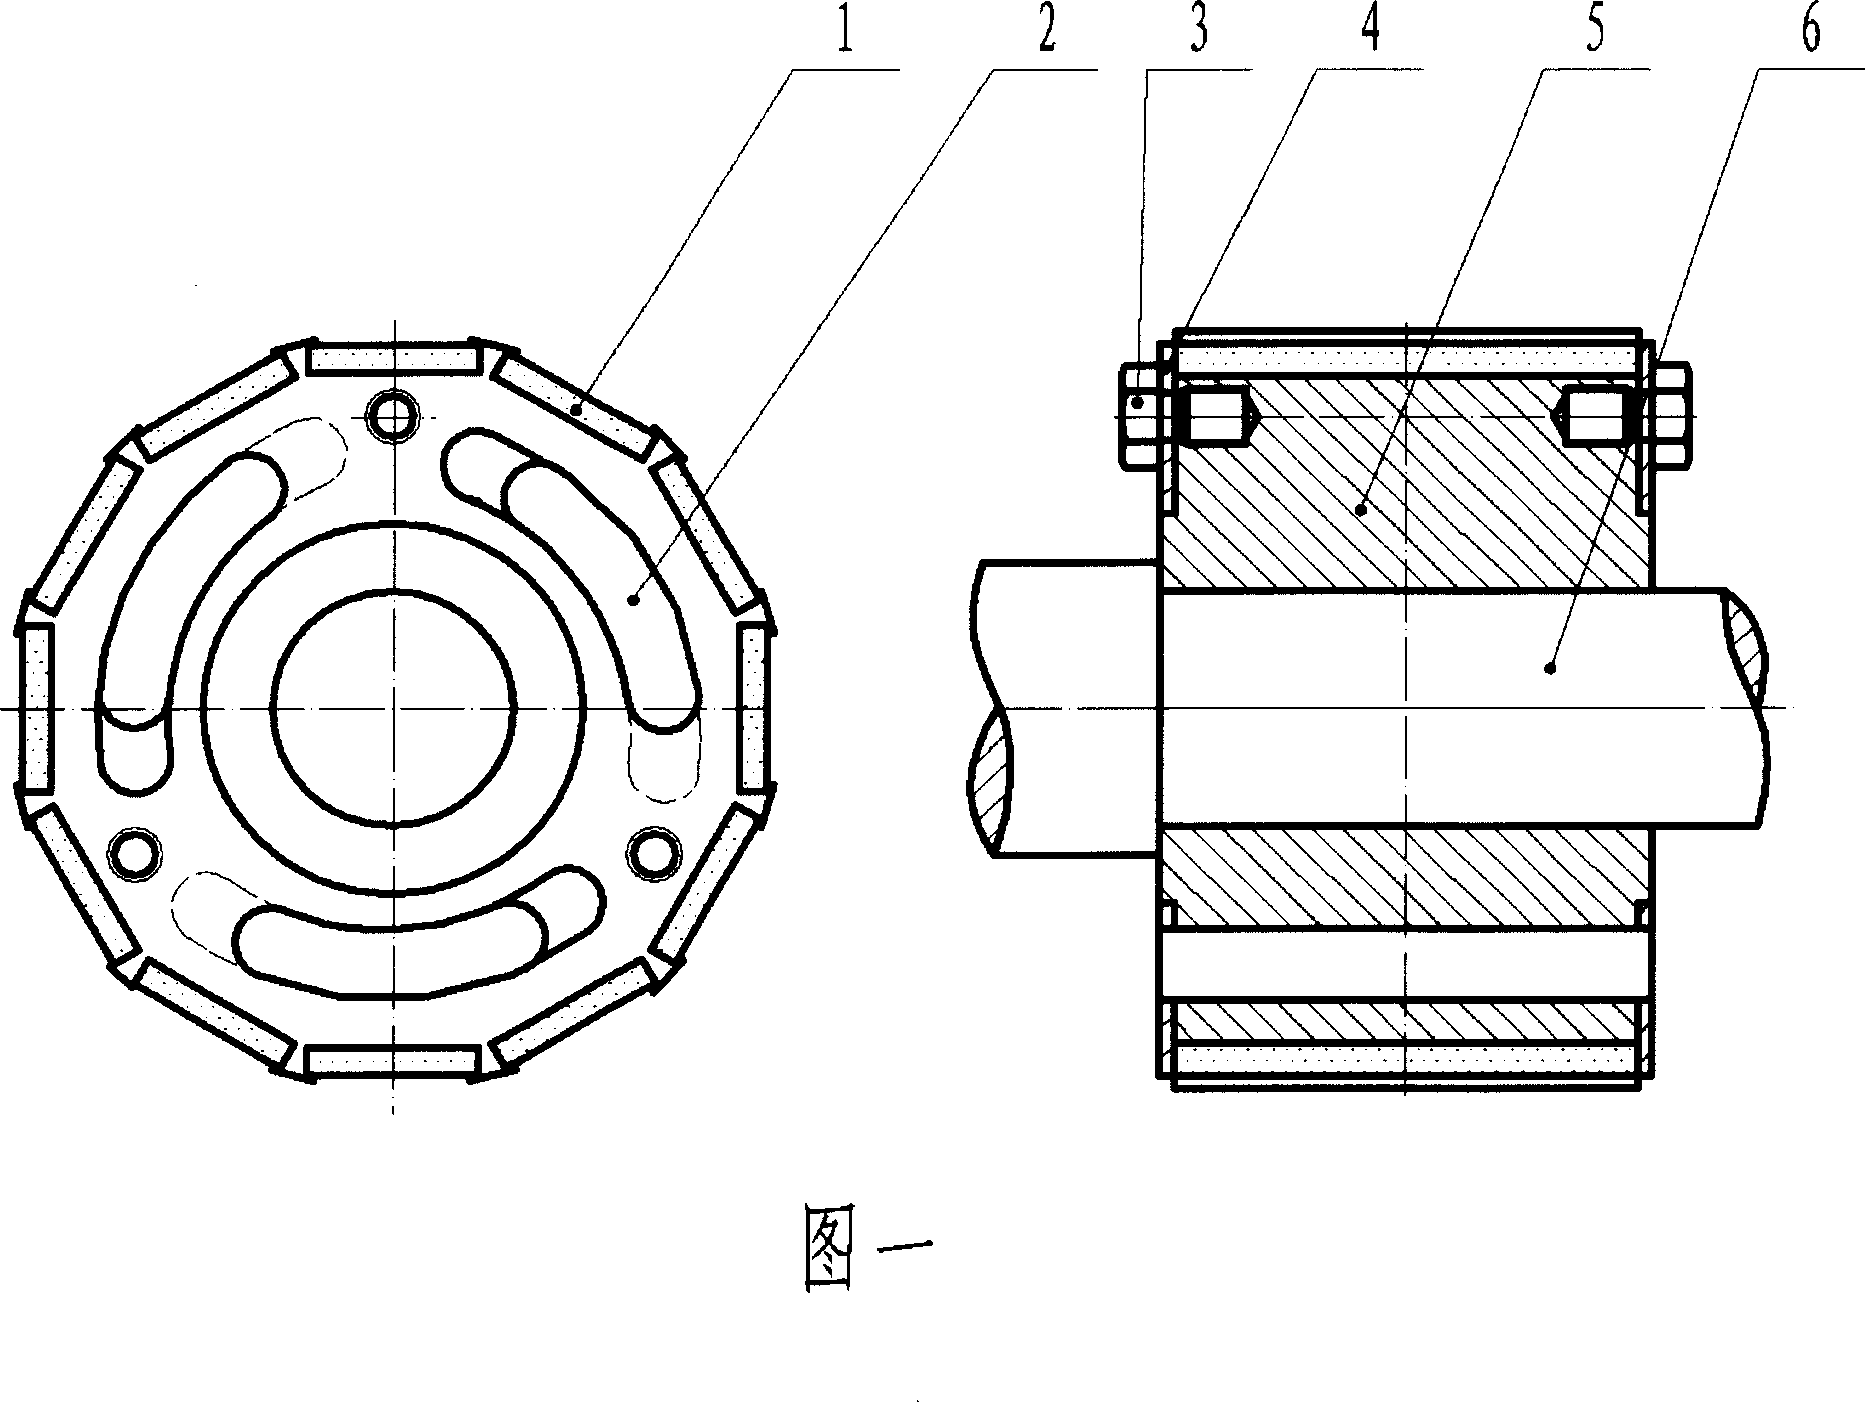 Permanent-magnet arc welding alternator rotor